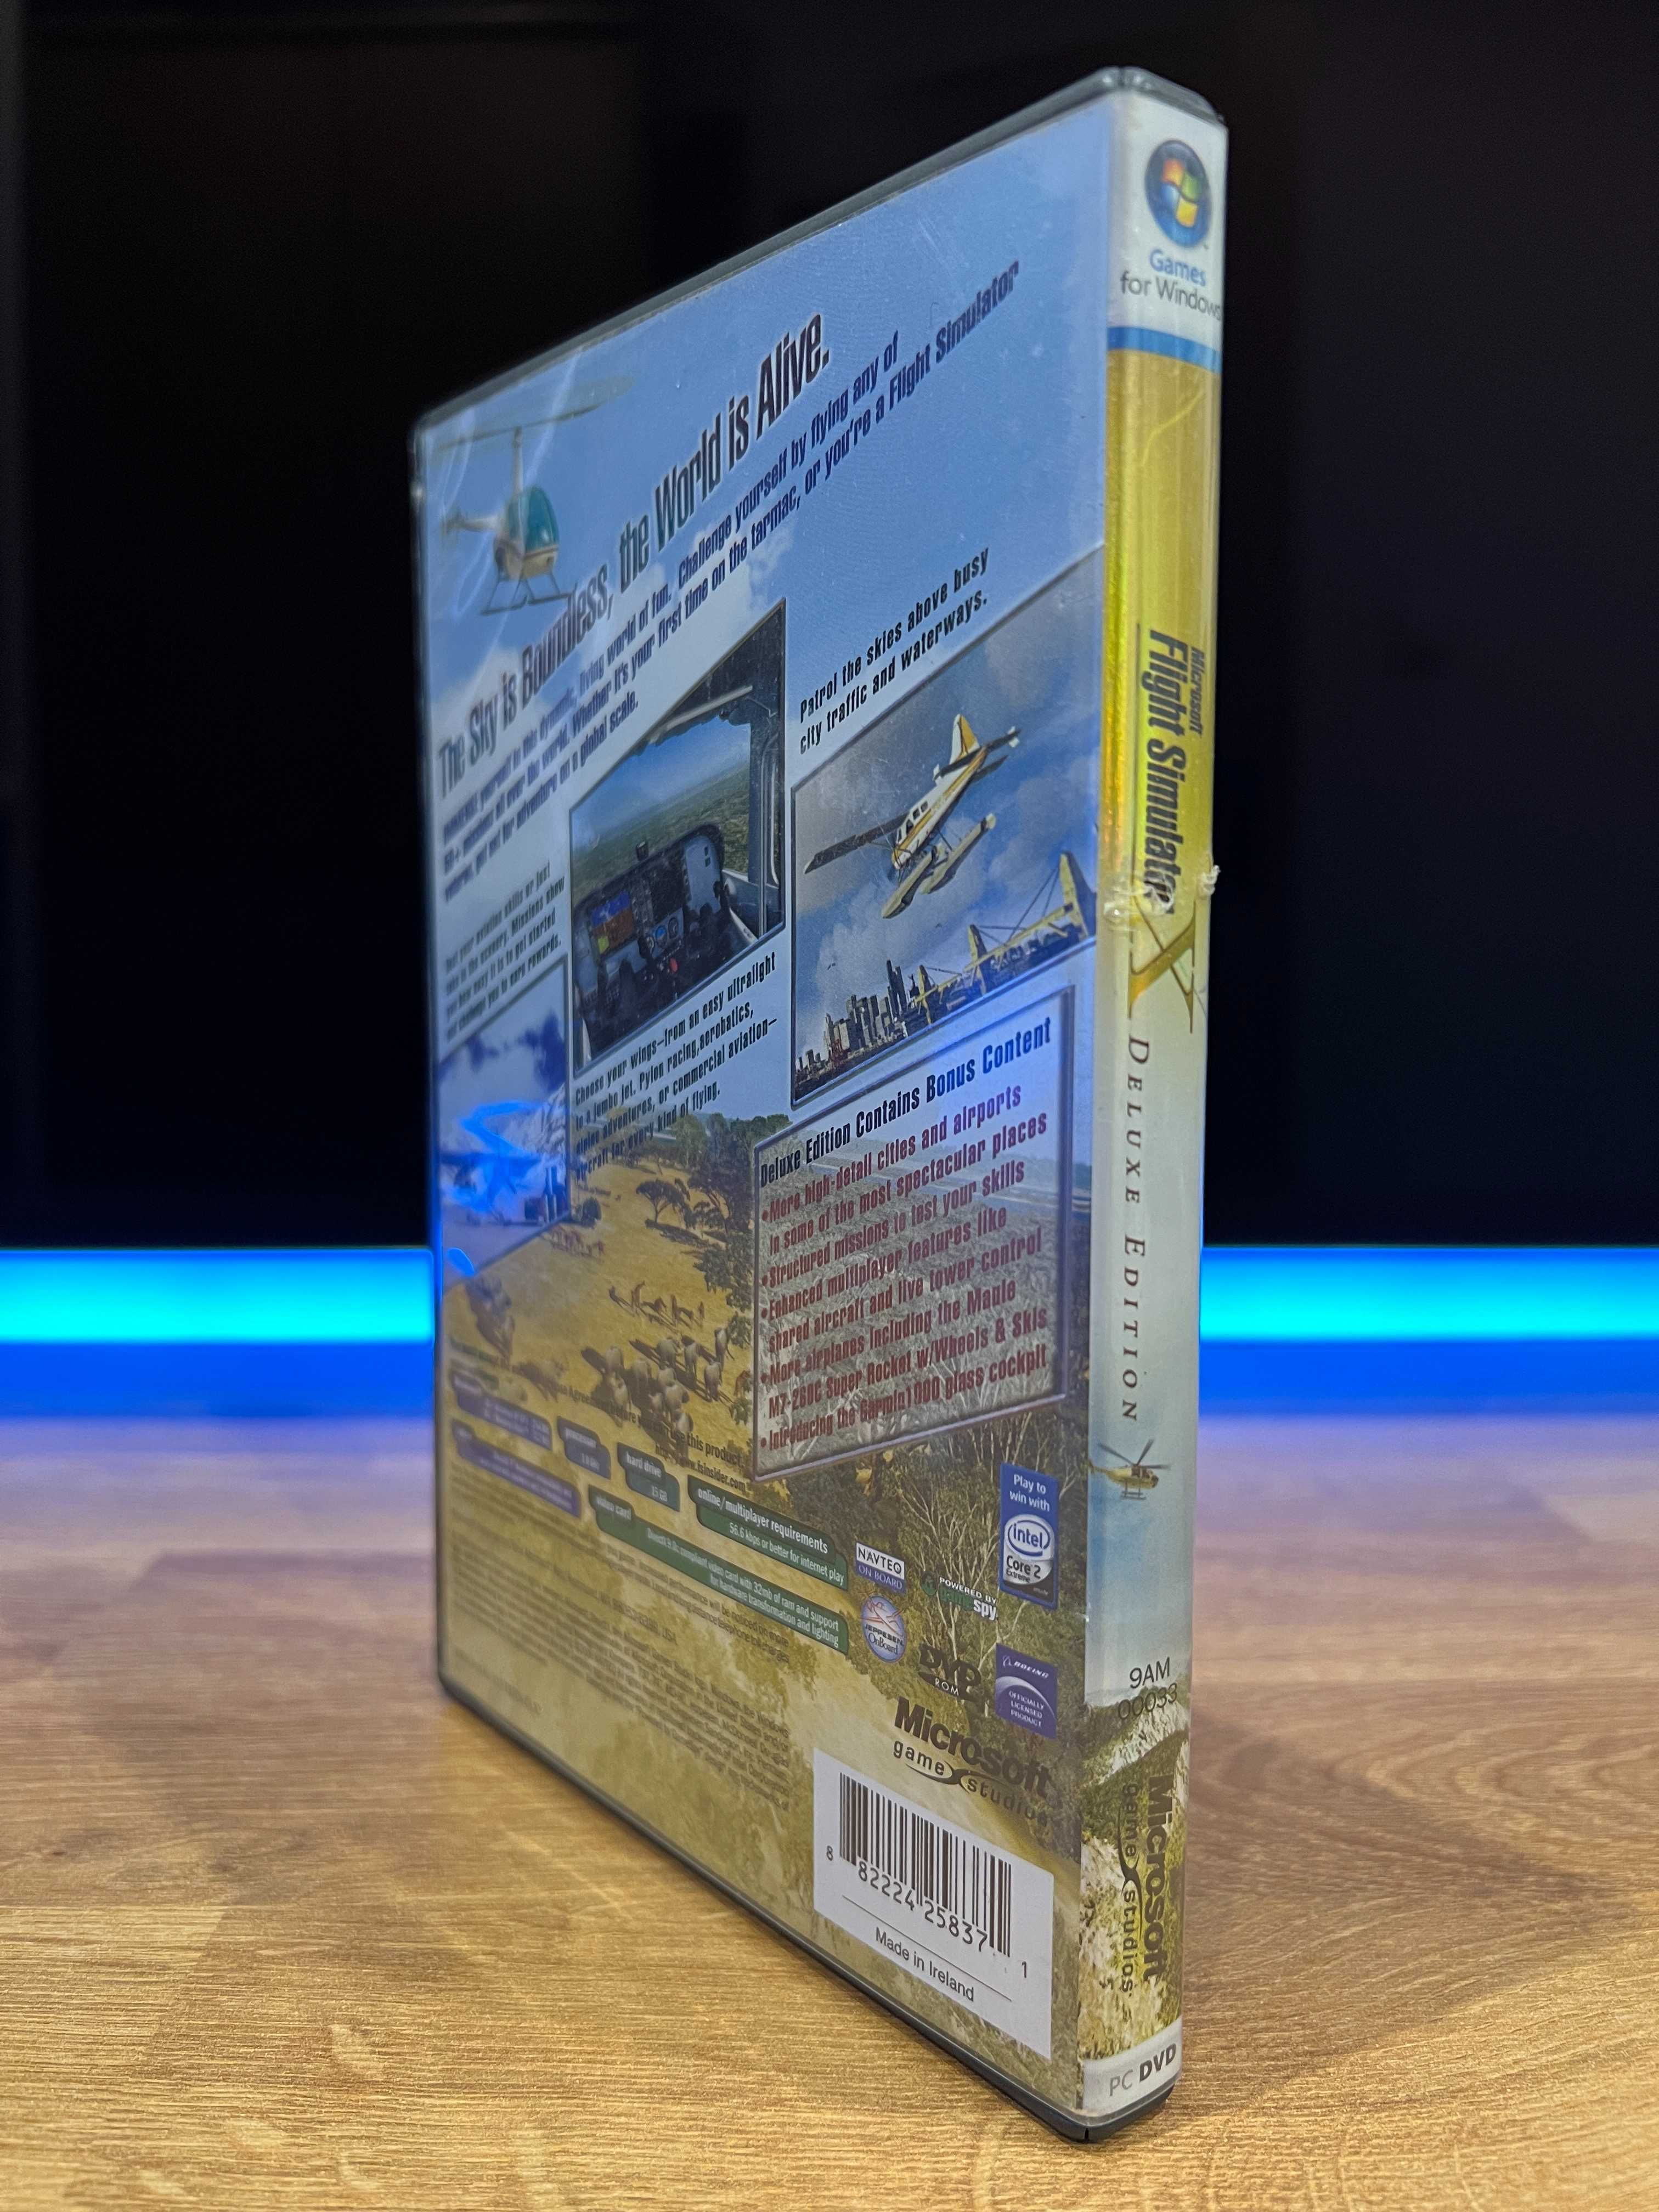 Flight Simulator X Deluxe Edition (PC EN 2006) BOX premierowe wydanie